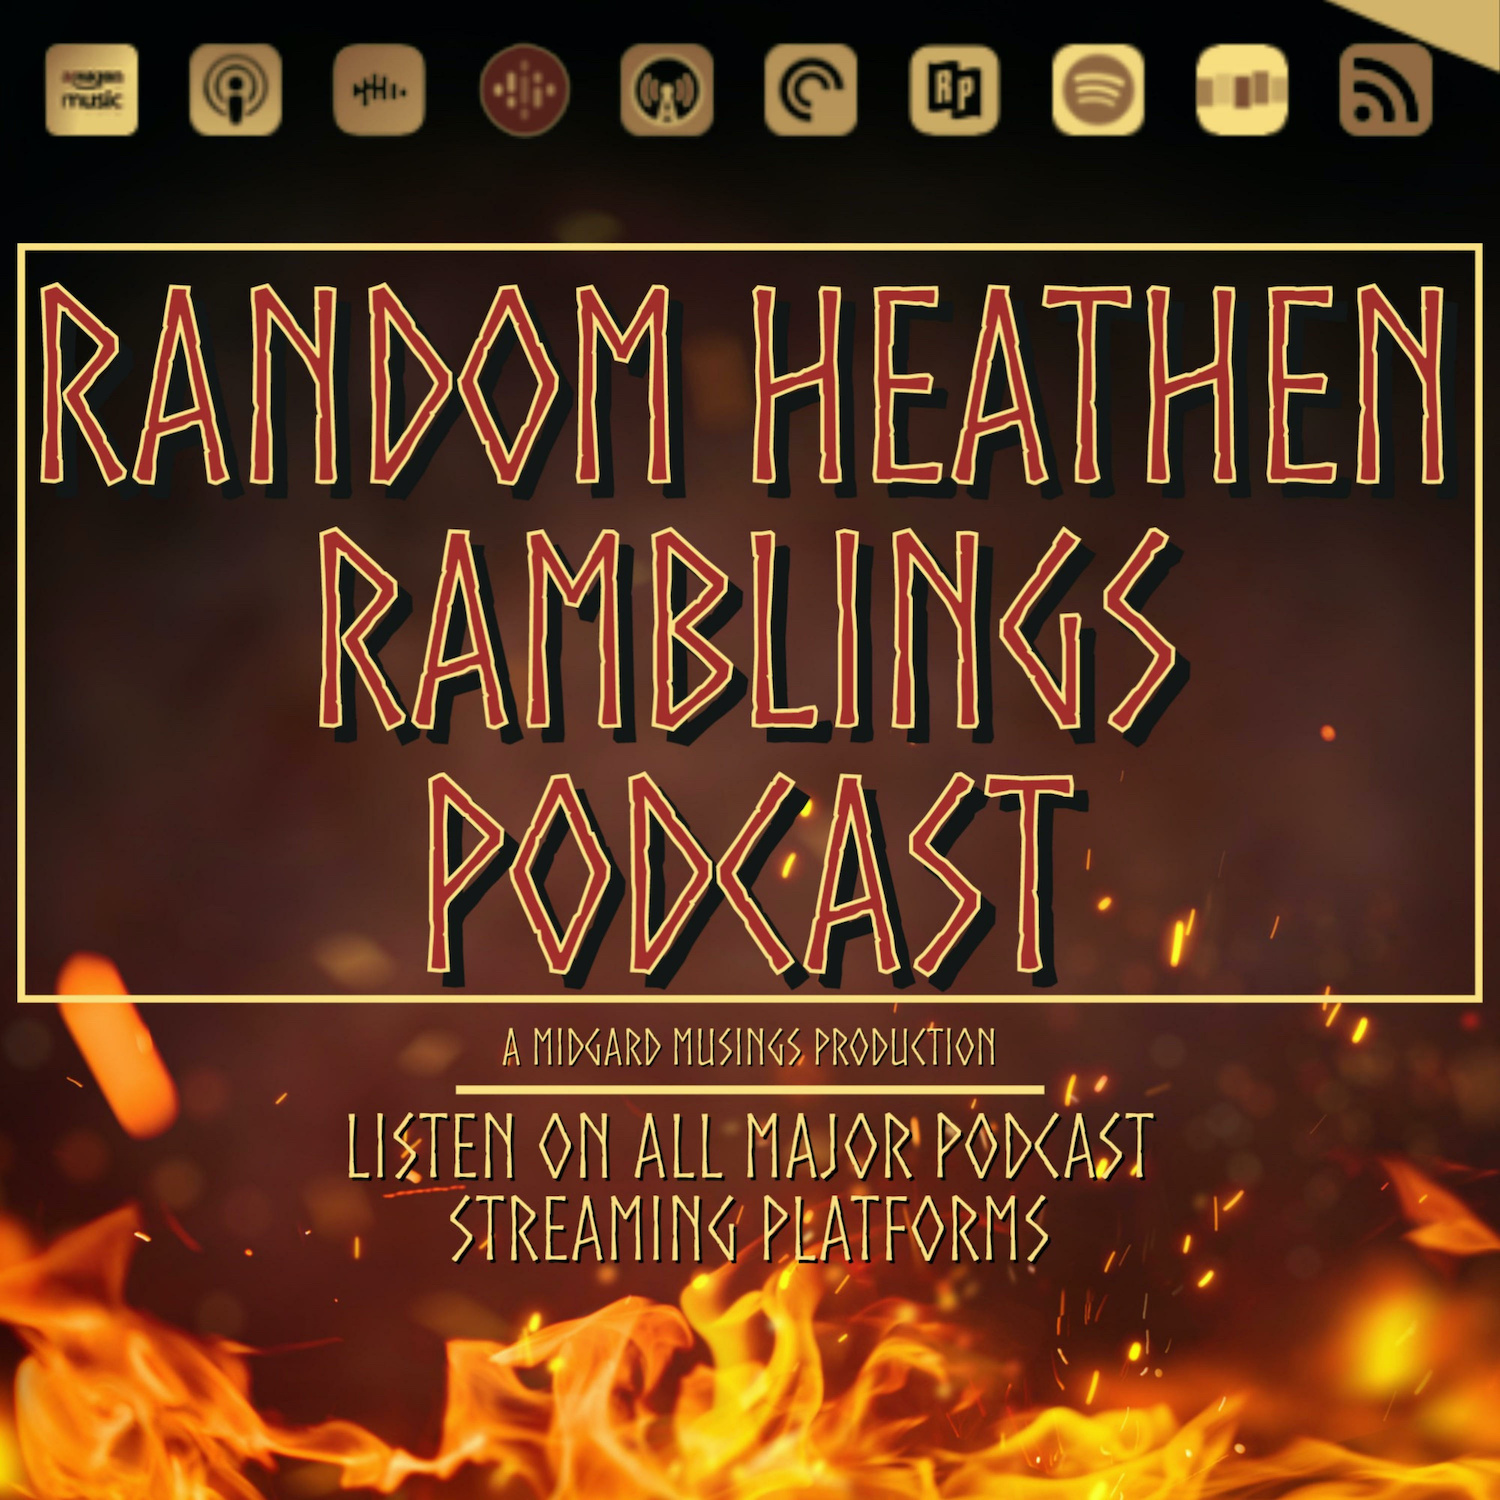 On the Random Heathen Ramblings Podcast